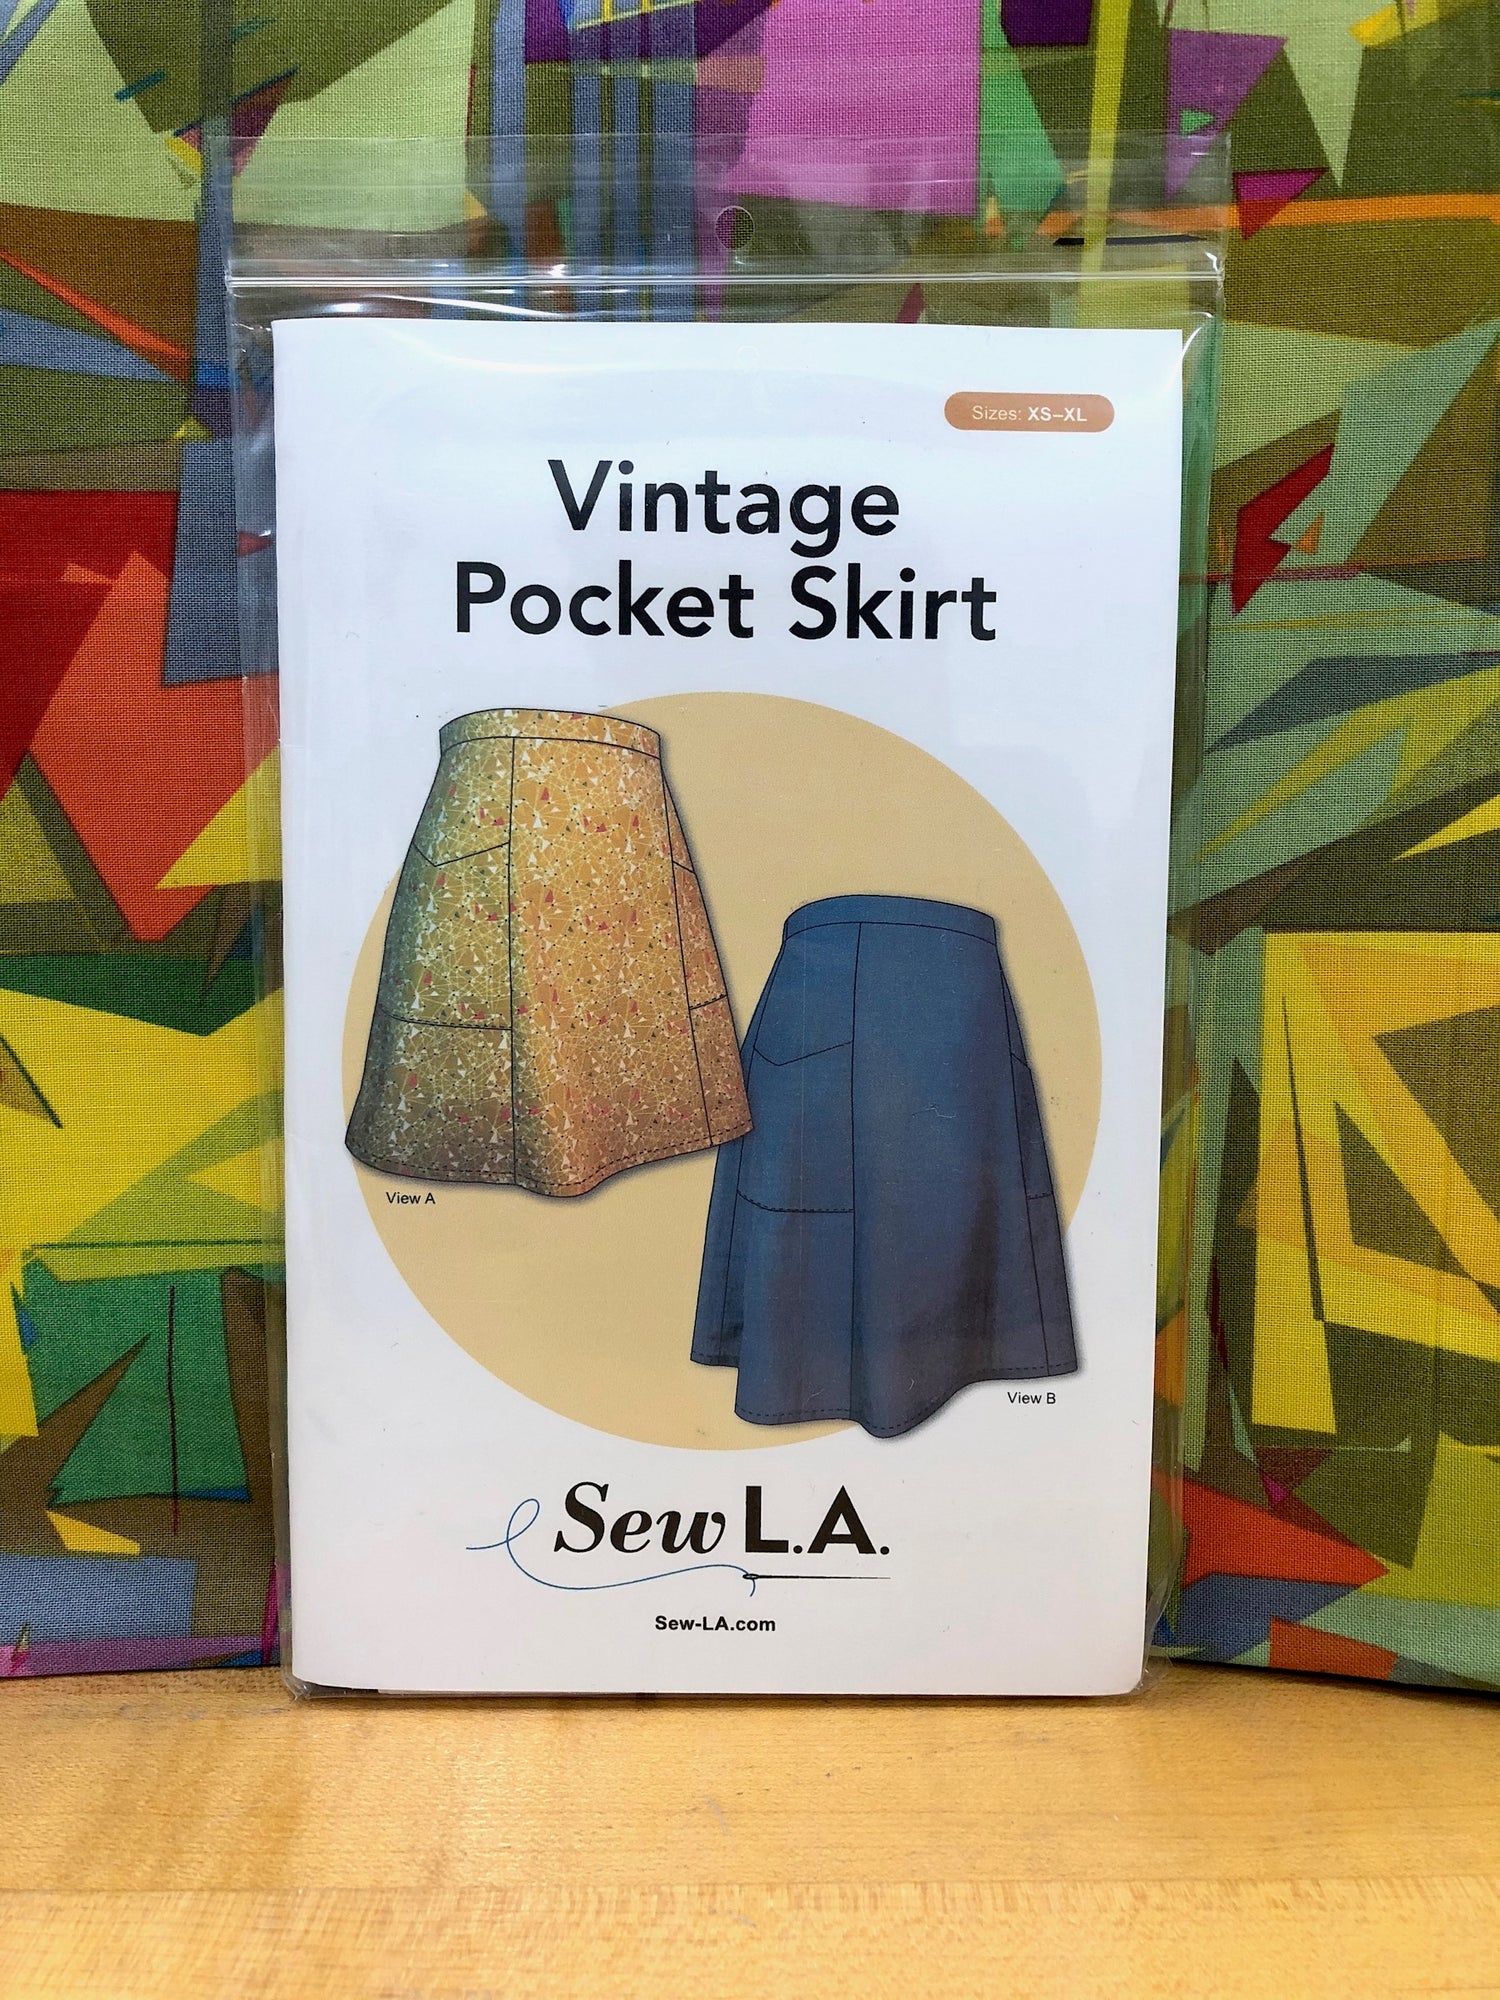 Sewing Patterns and Kits